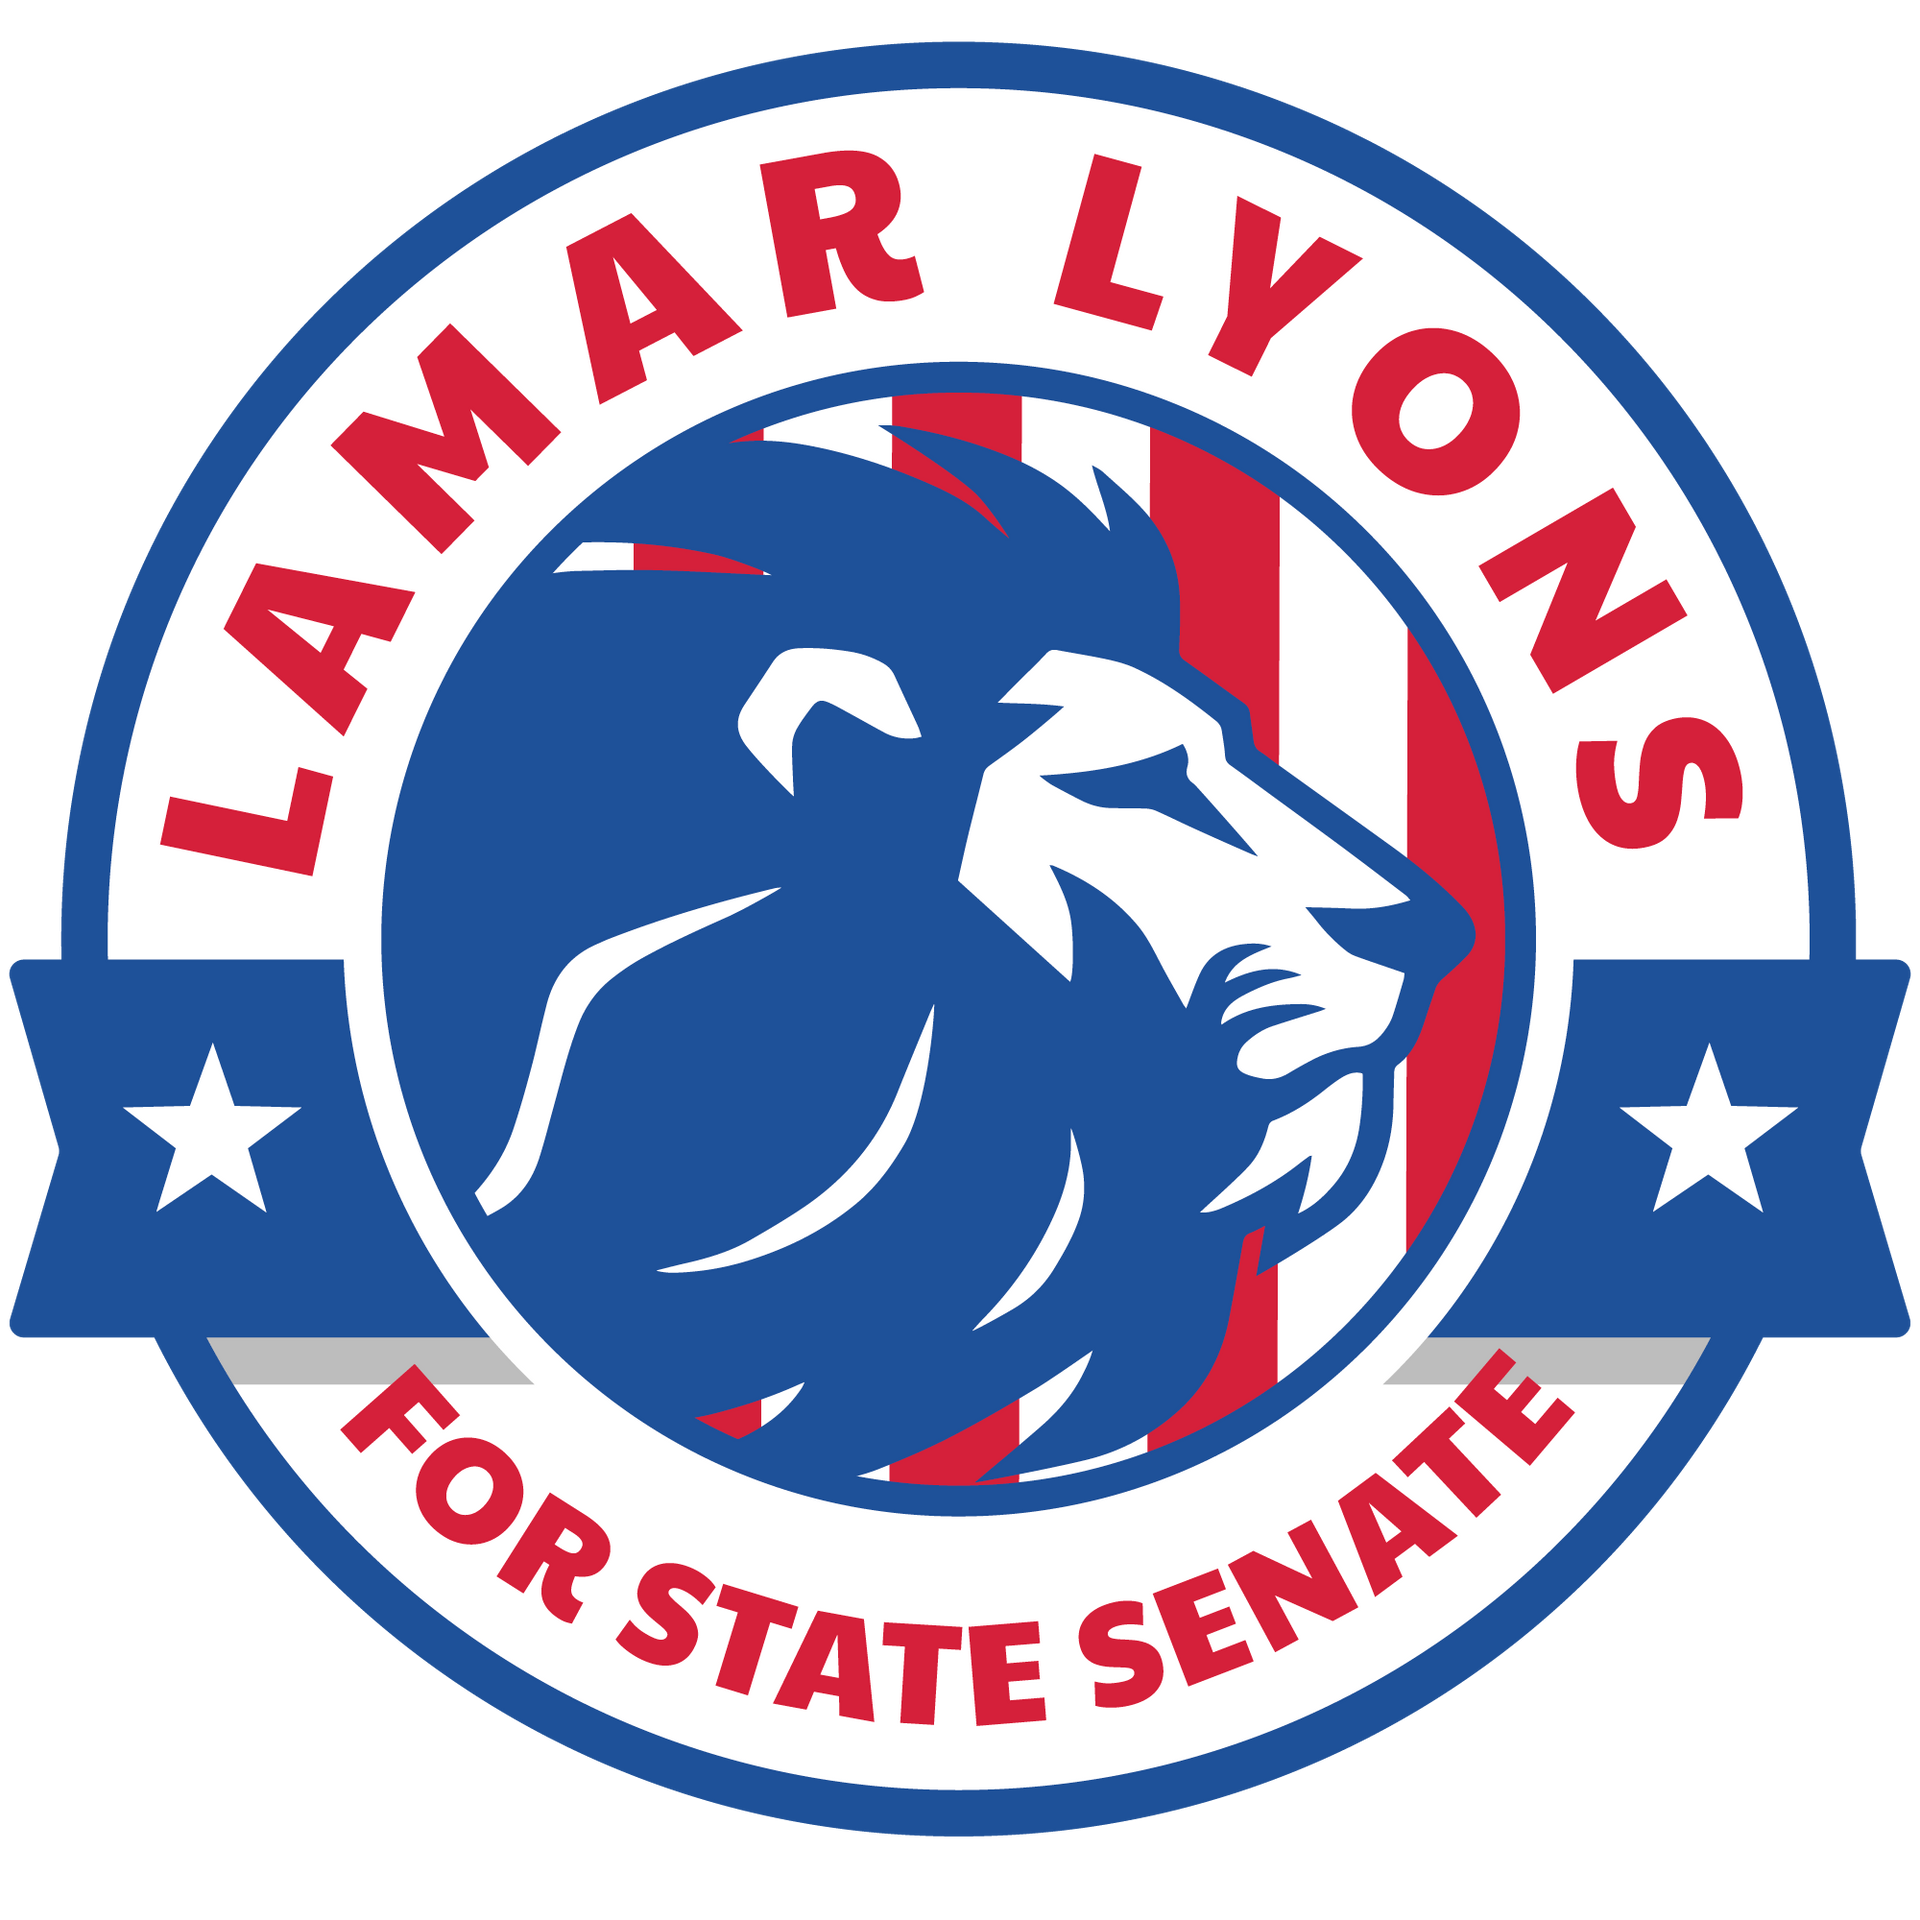 Lamar Lyons 35th District of California logo.